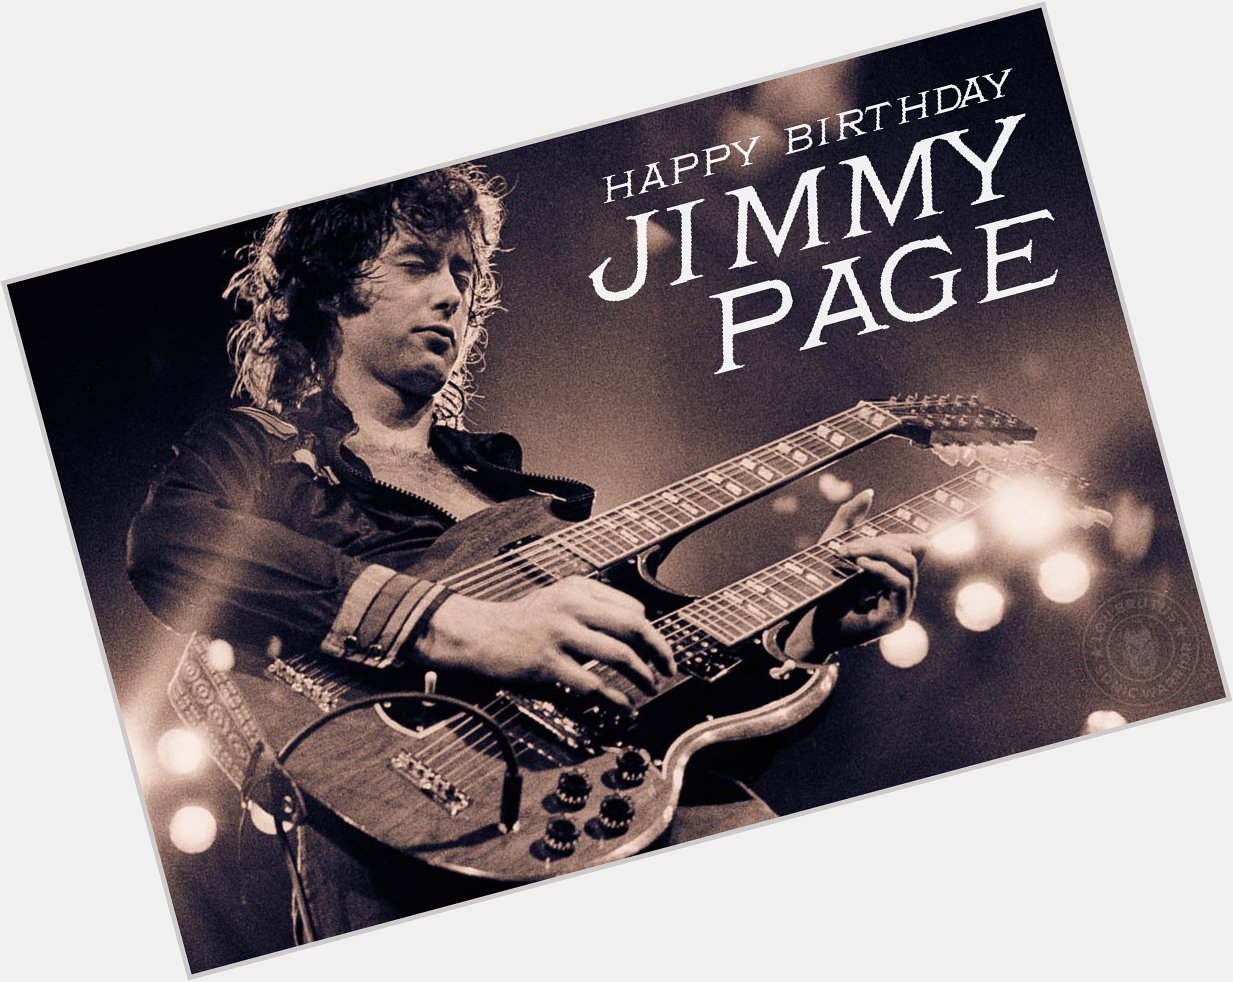 Happy Birthday Jimmy Page.  